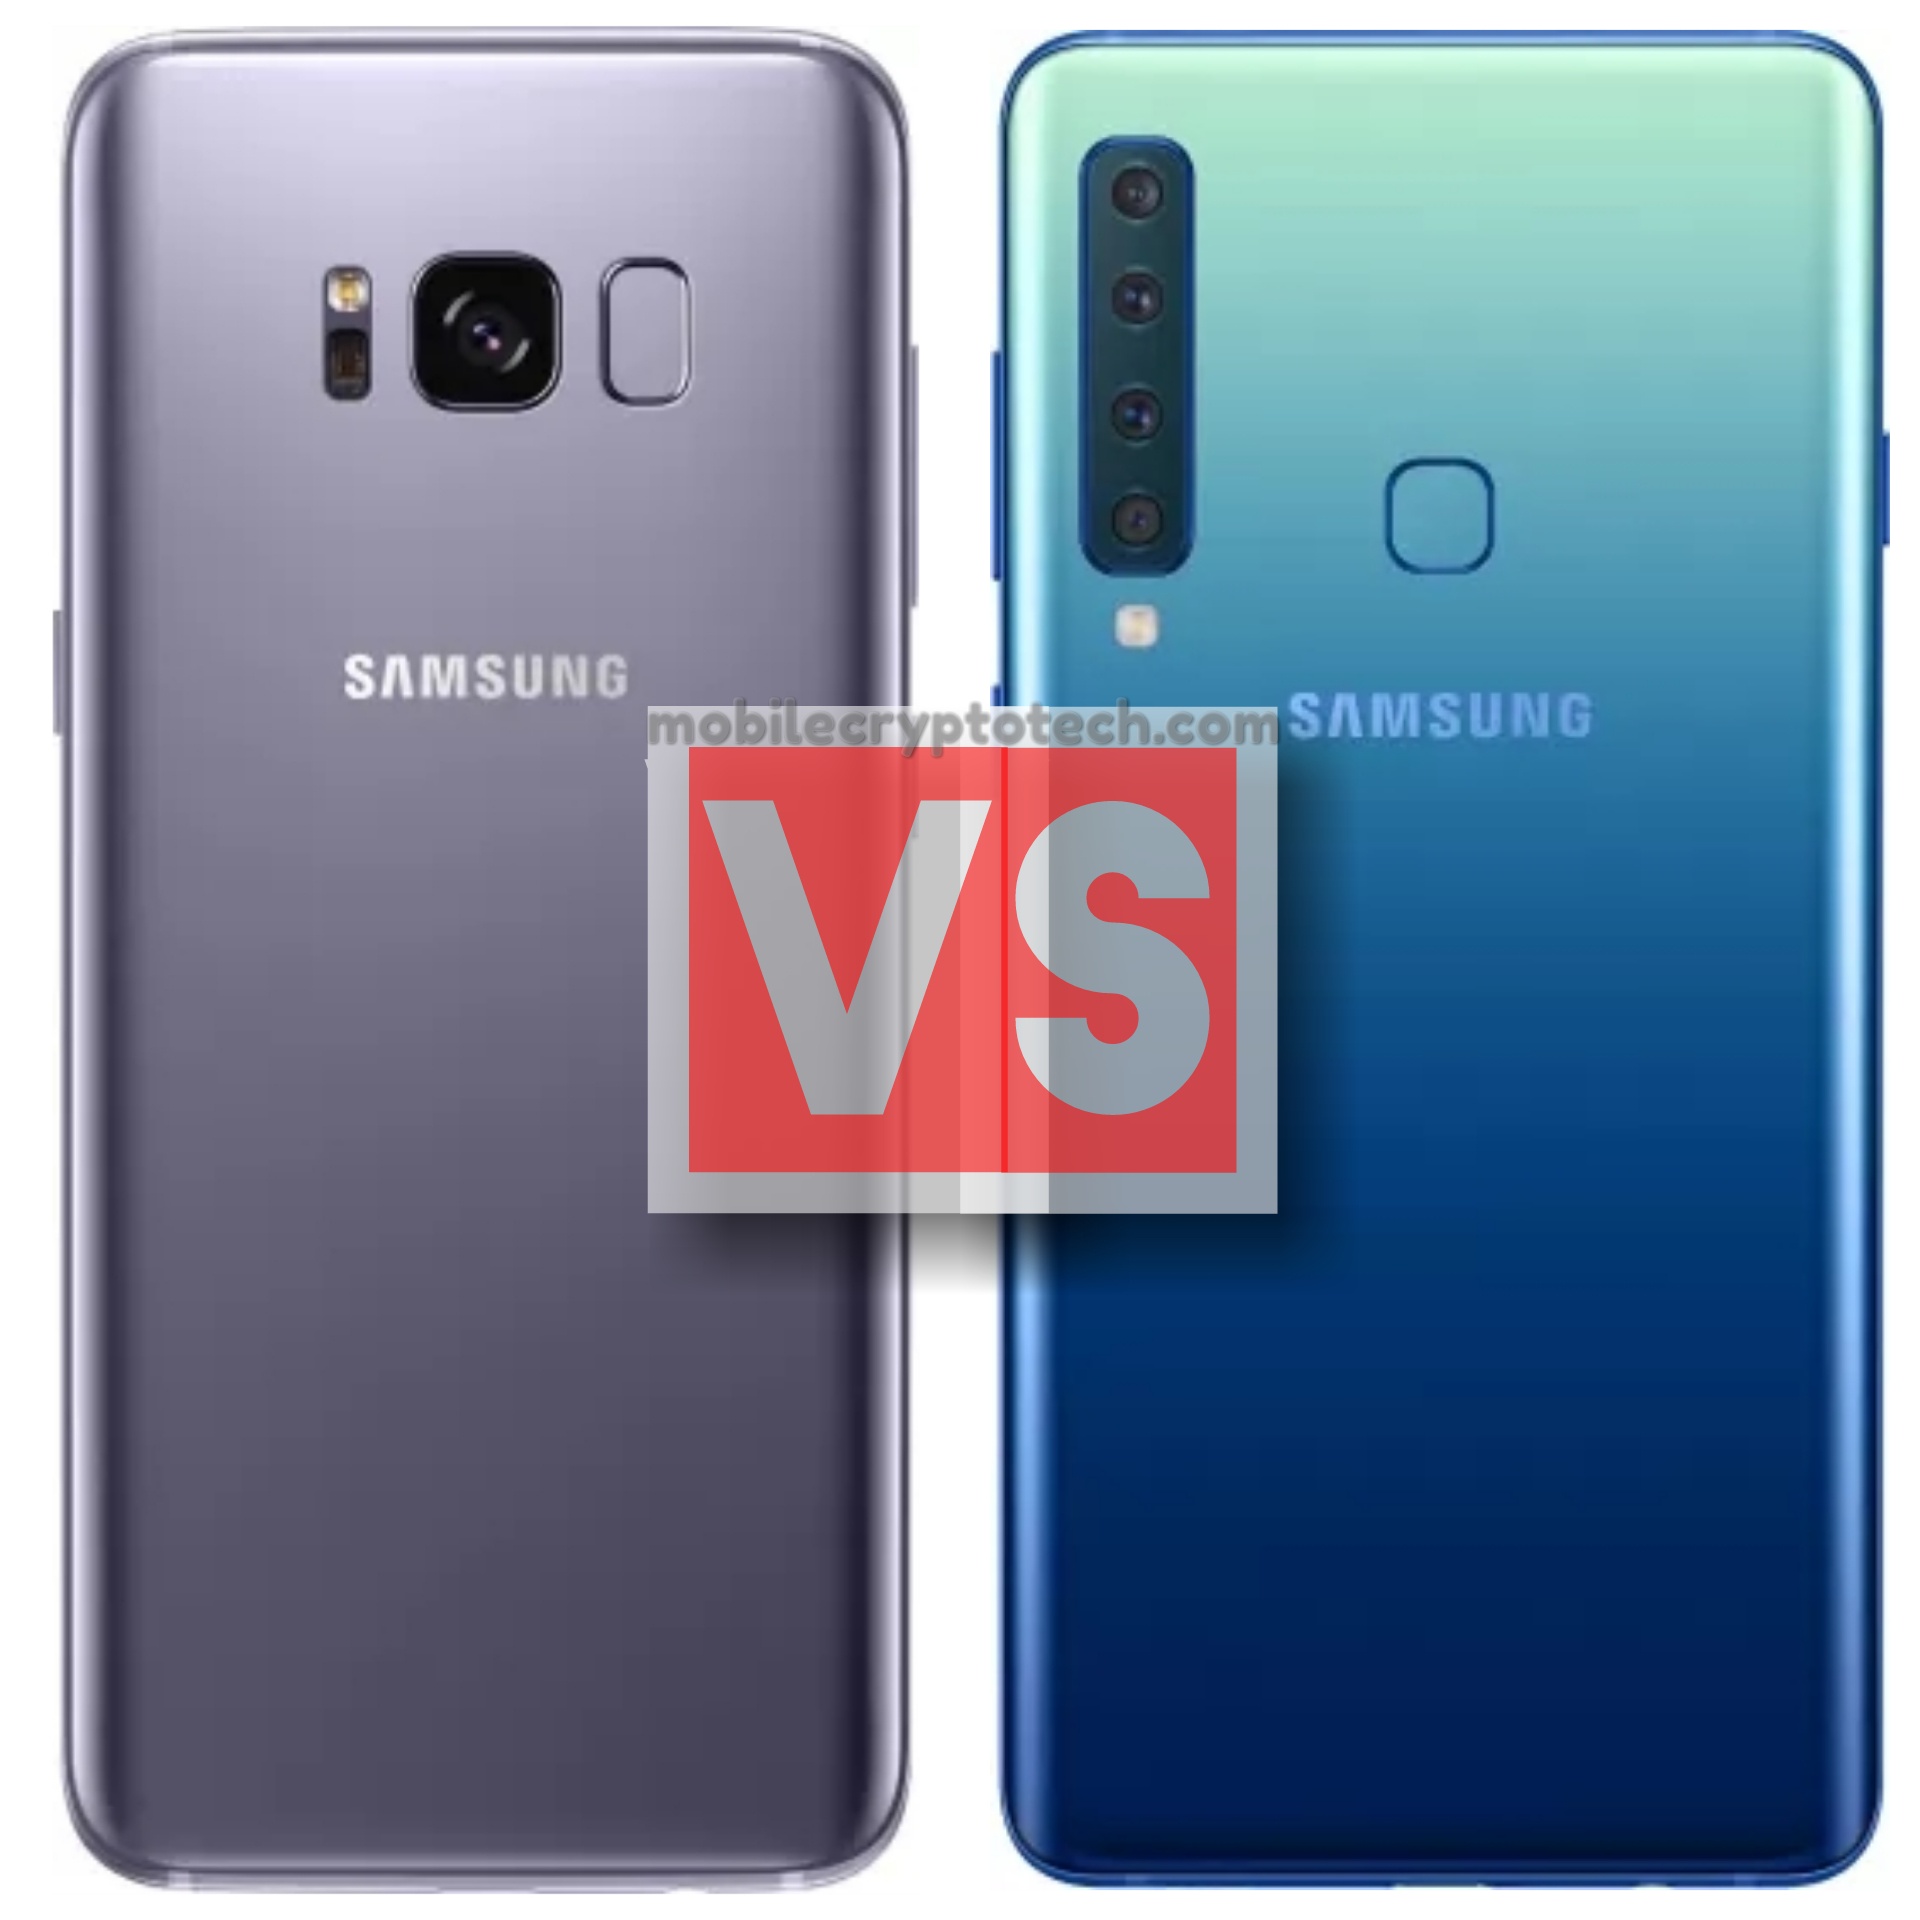 Samsung Galaxy S8 Vs A9 2018